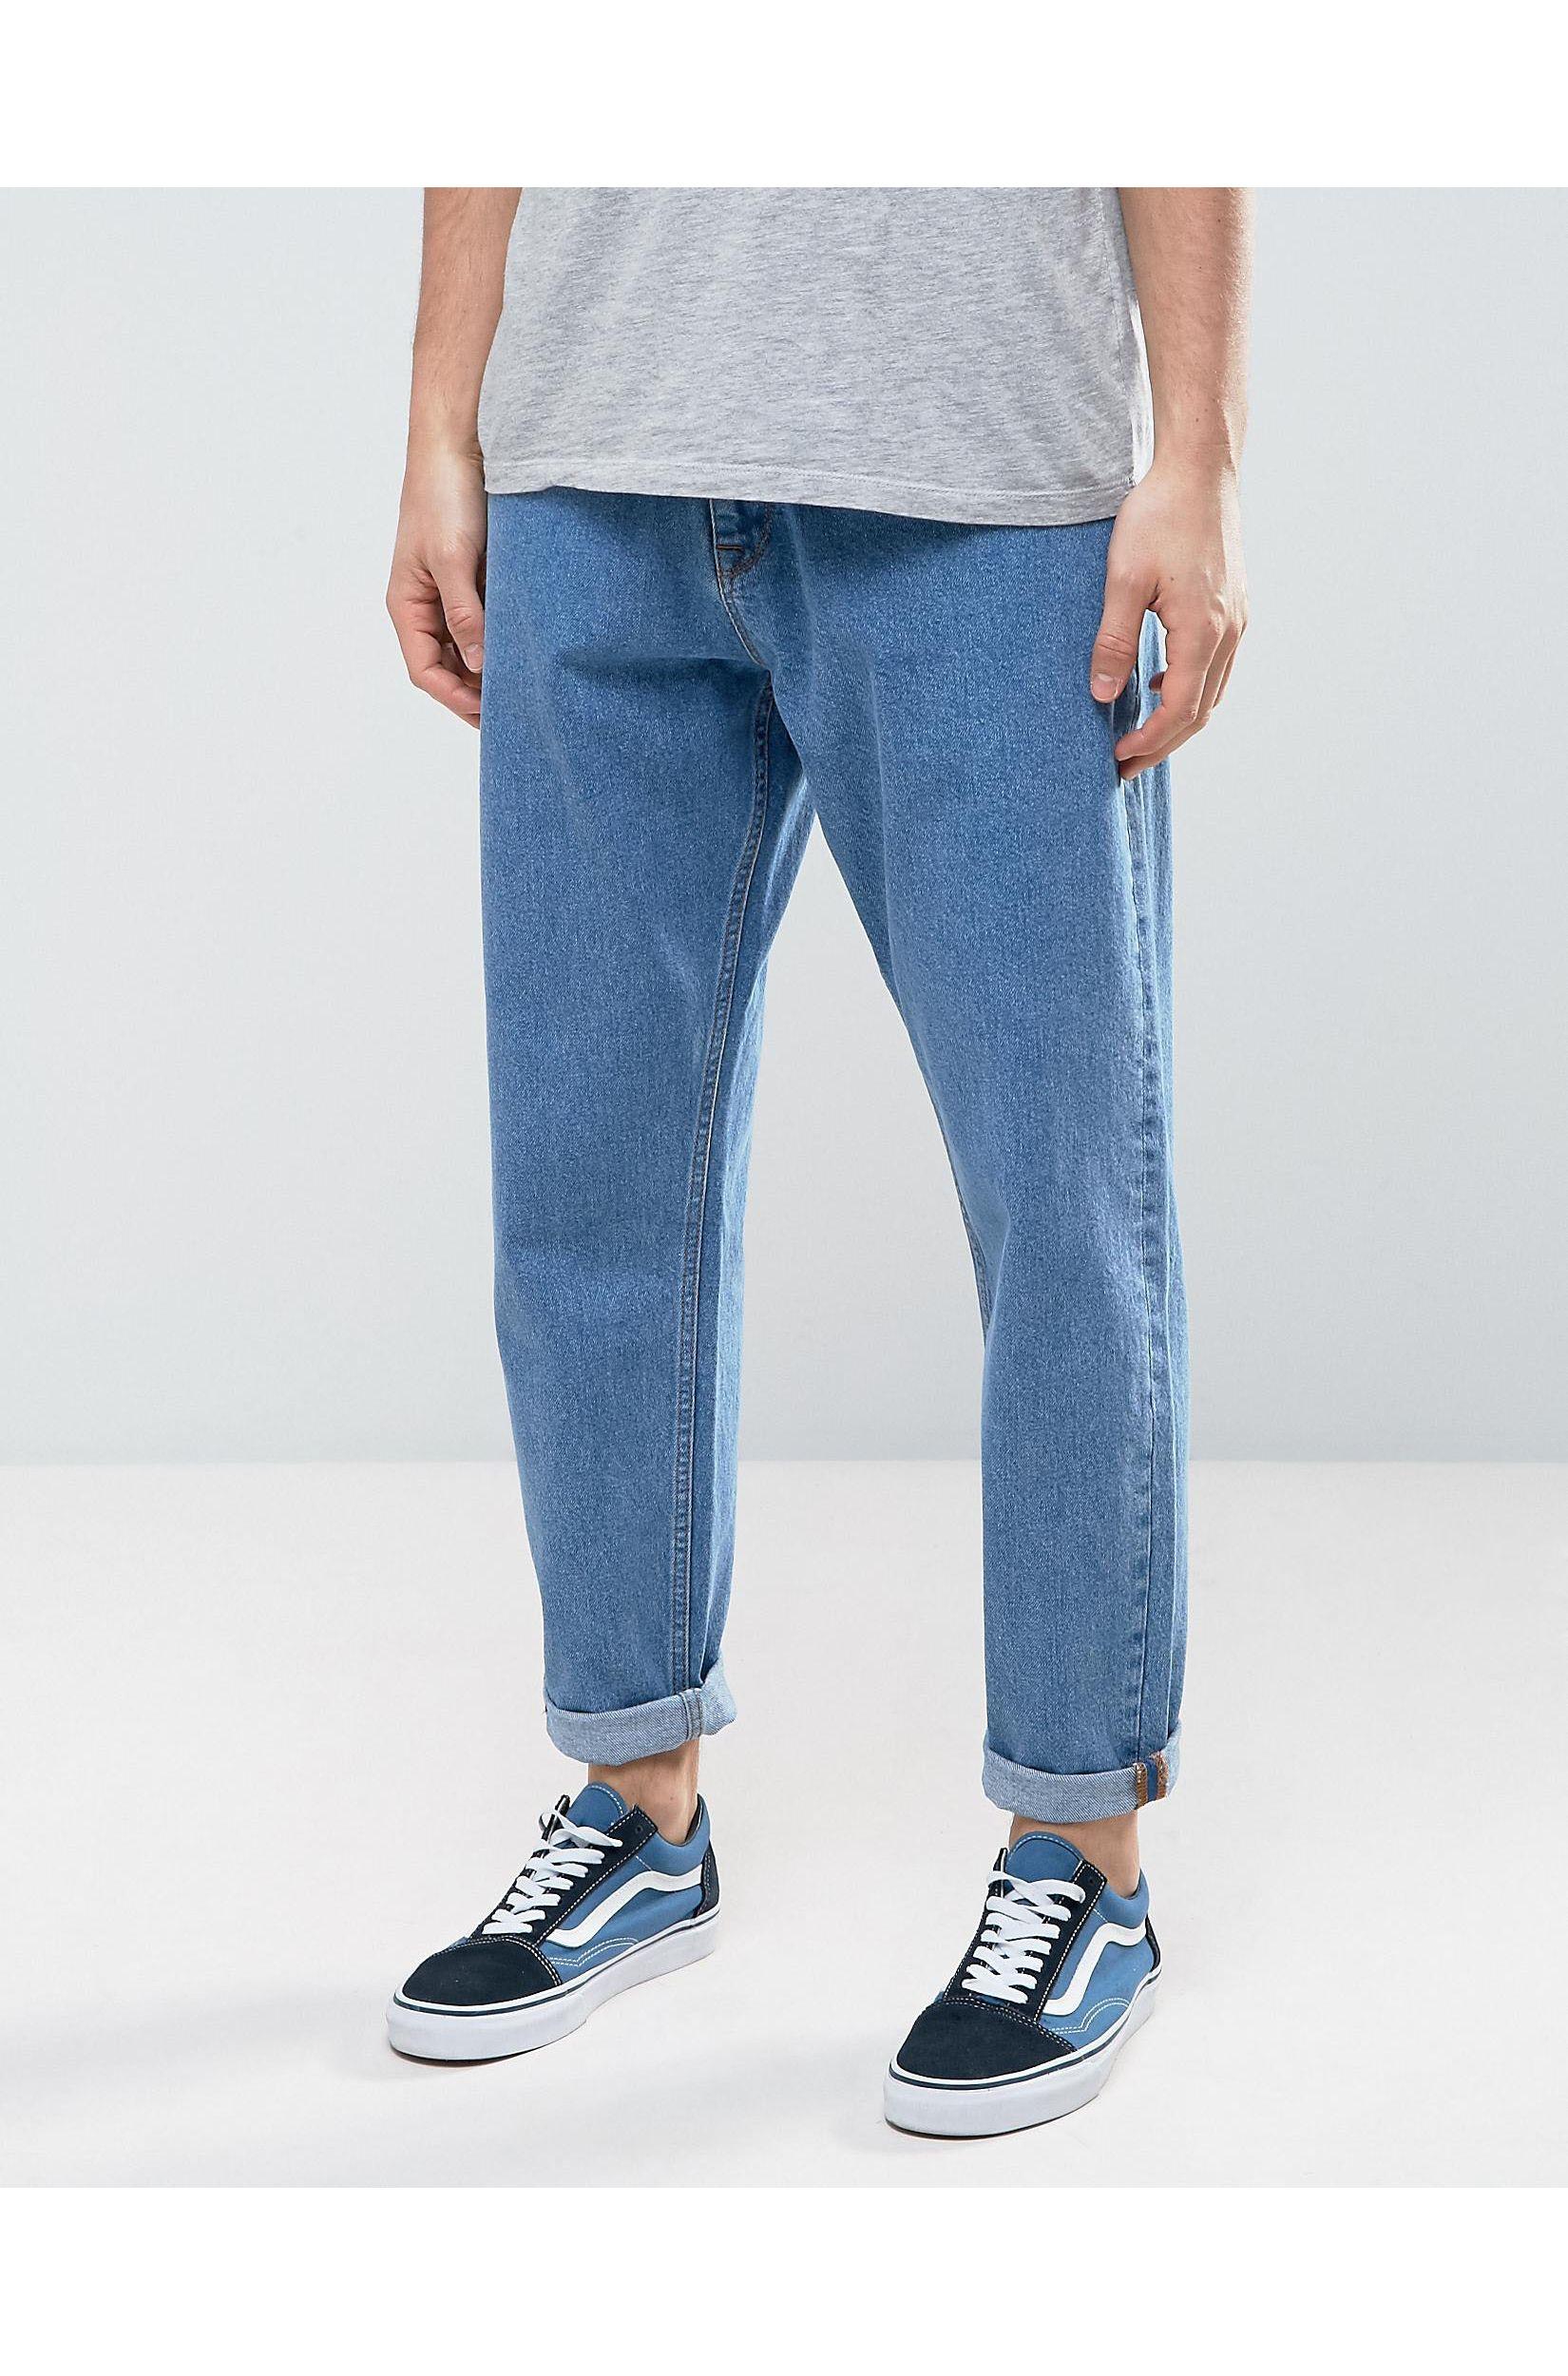 ASOS Asos Oversized Tapered Jeans In Vintage Mid Wash Blue for Men | Lyst